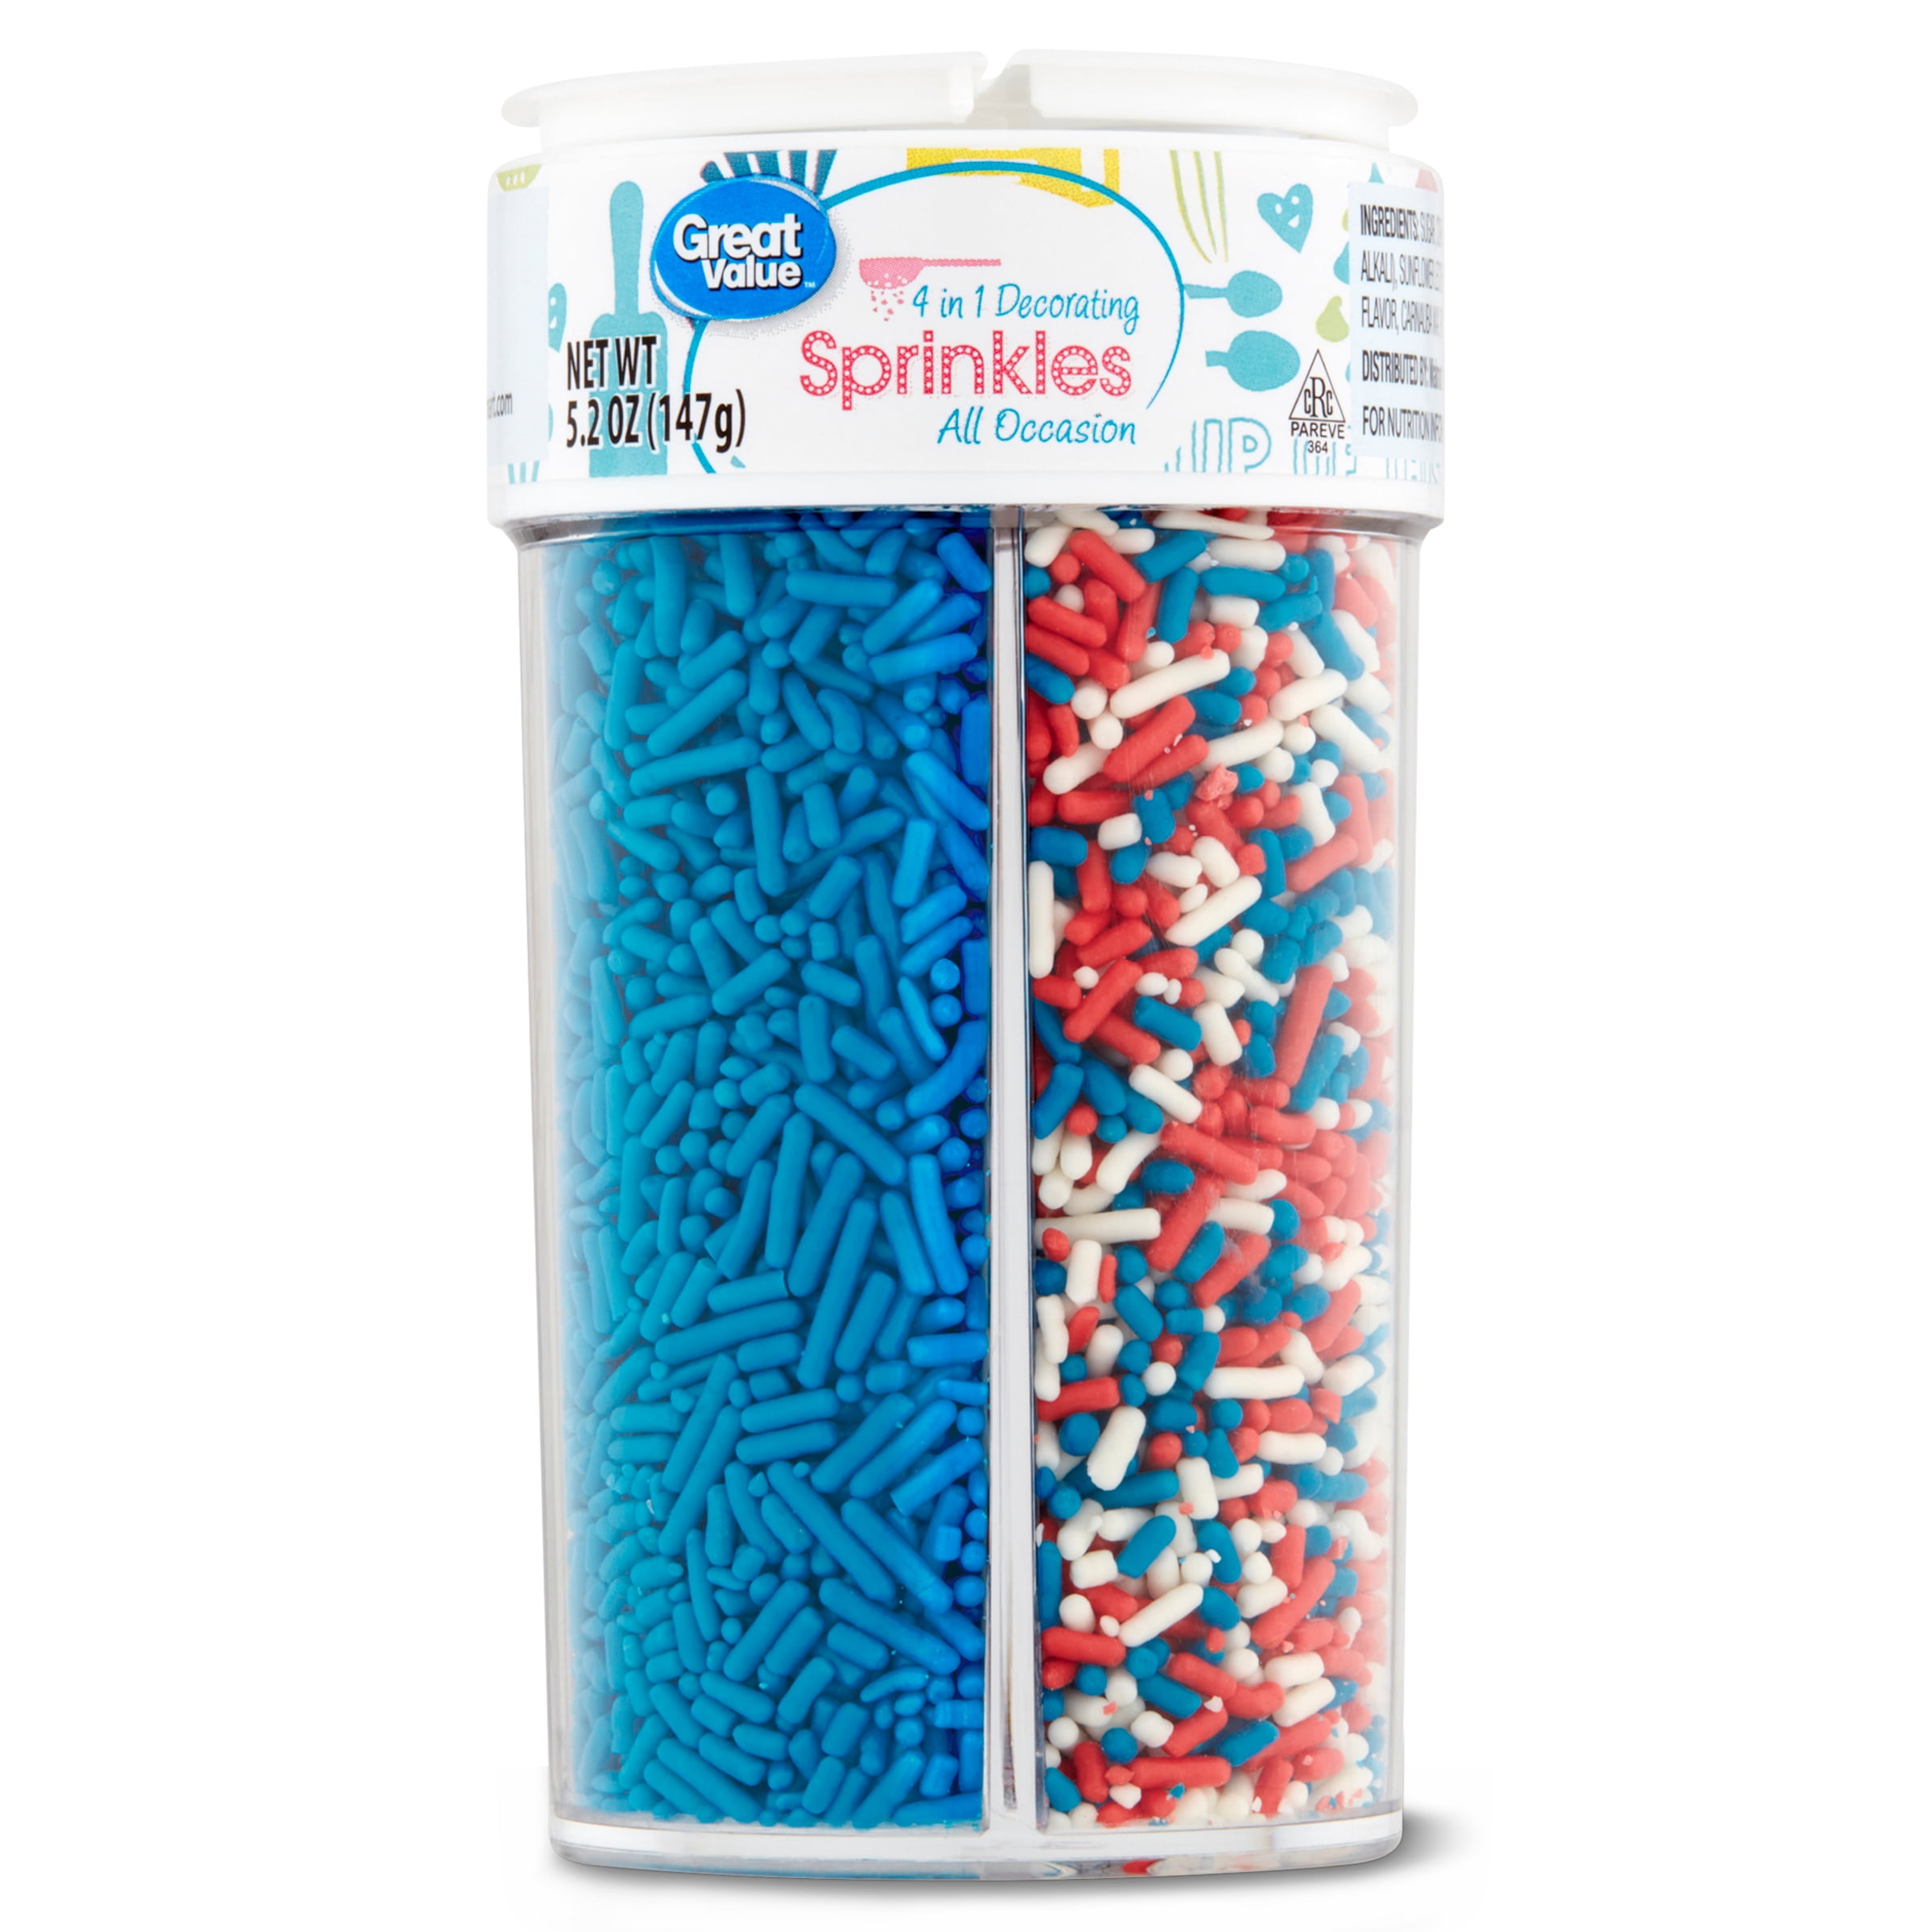 Fancy Sprinkles is your one stop shop for gourmet sprinkles